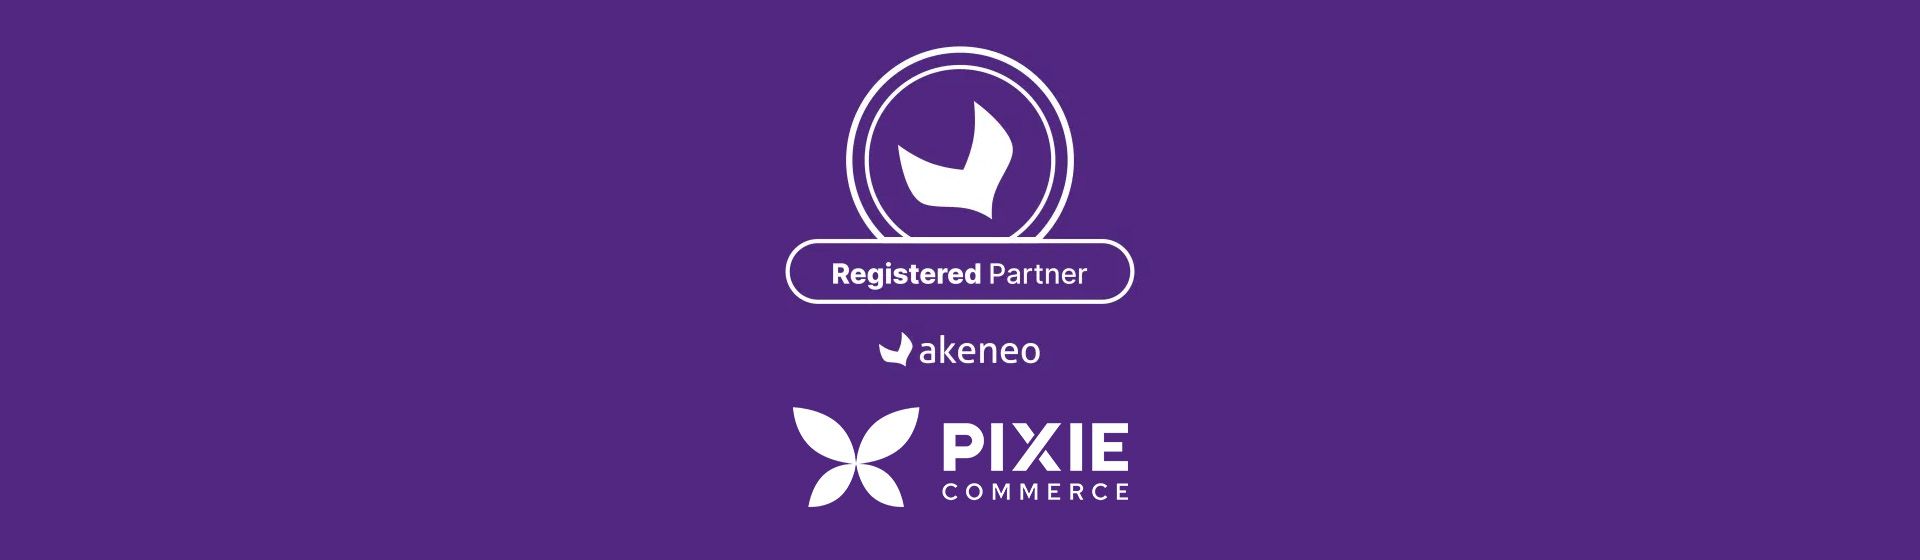 Pixie Commerce Announces Partnership with Akeneo